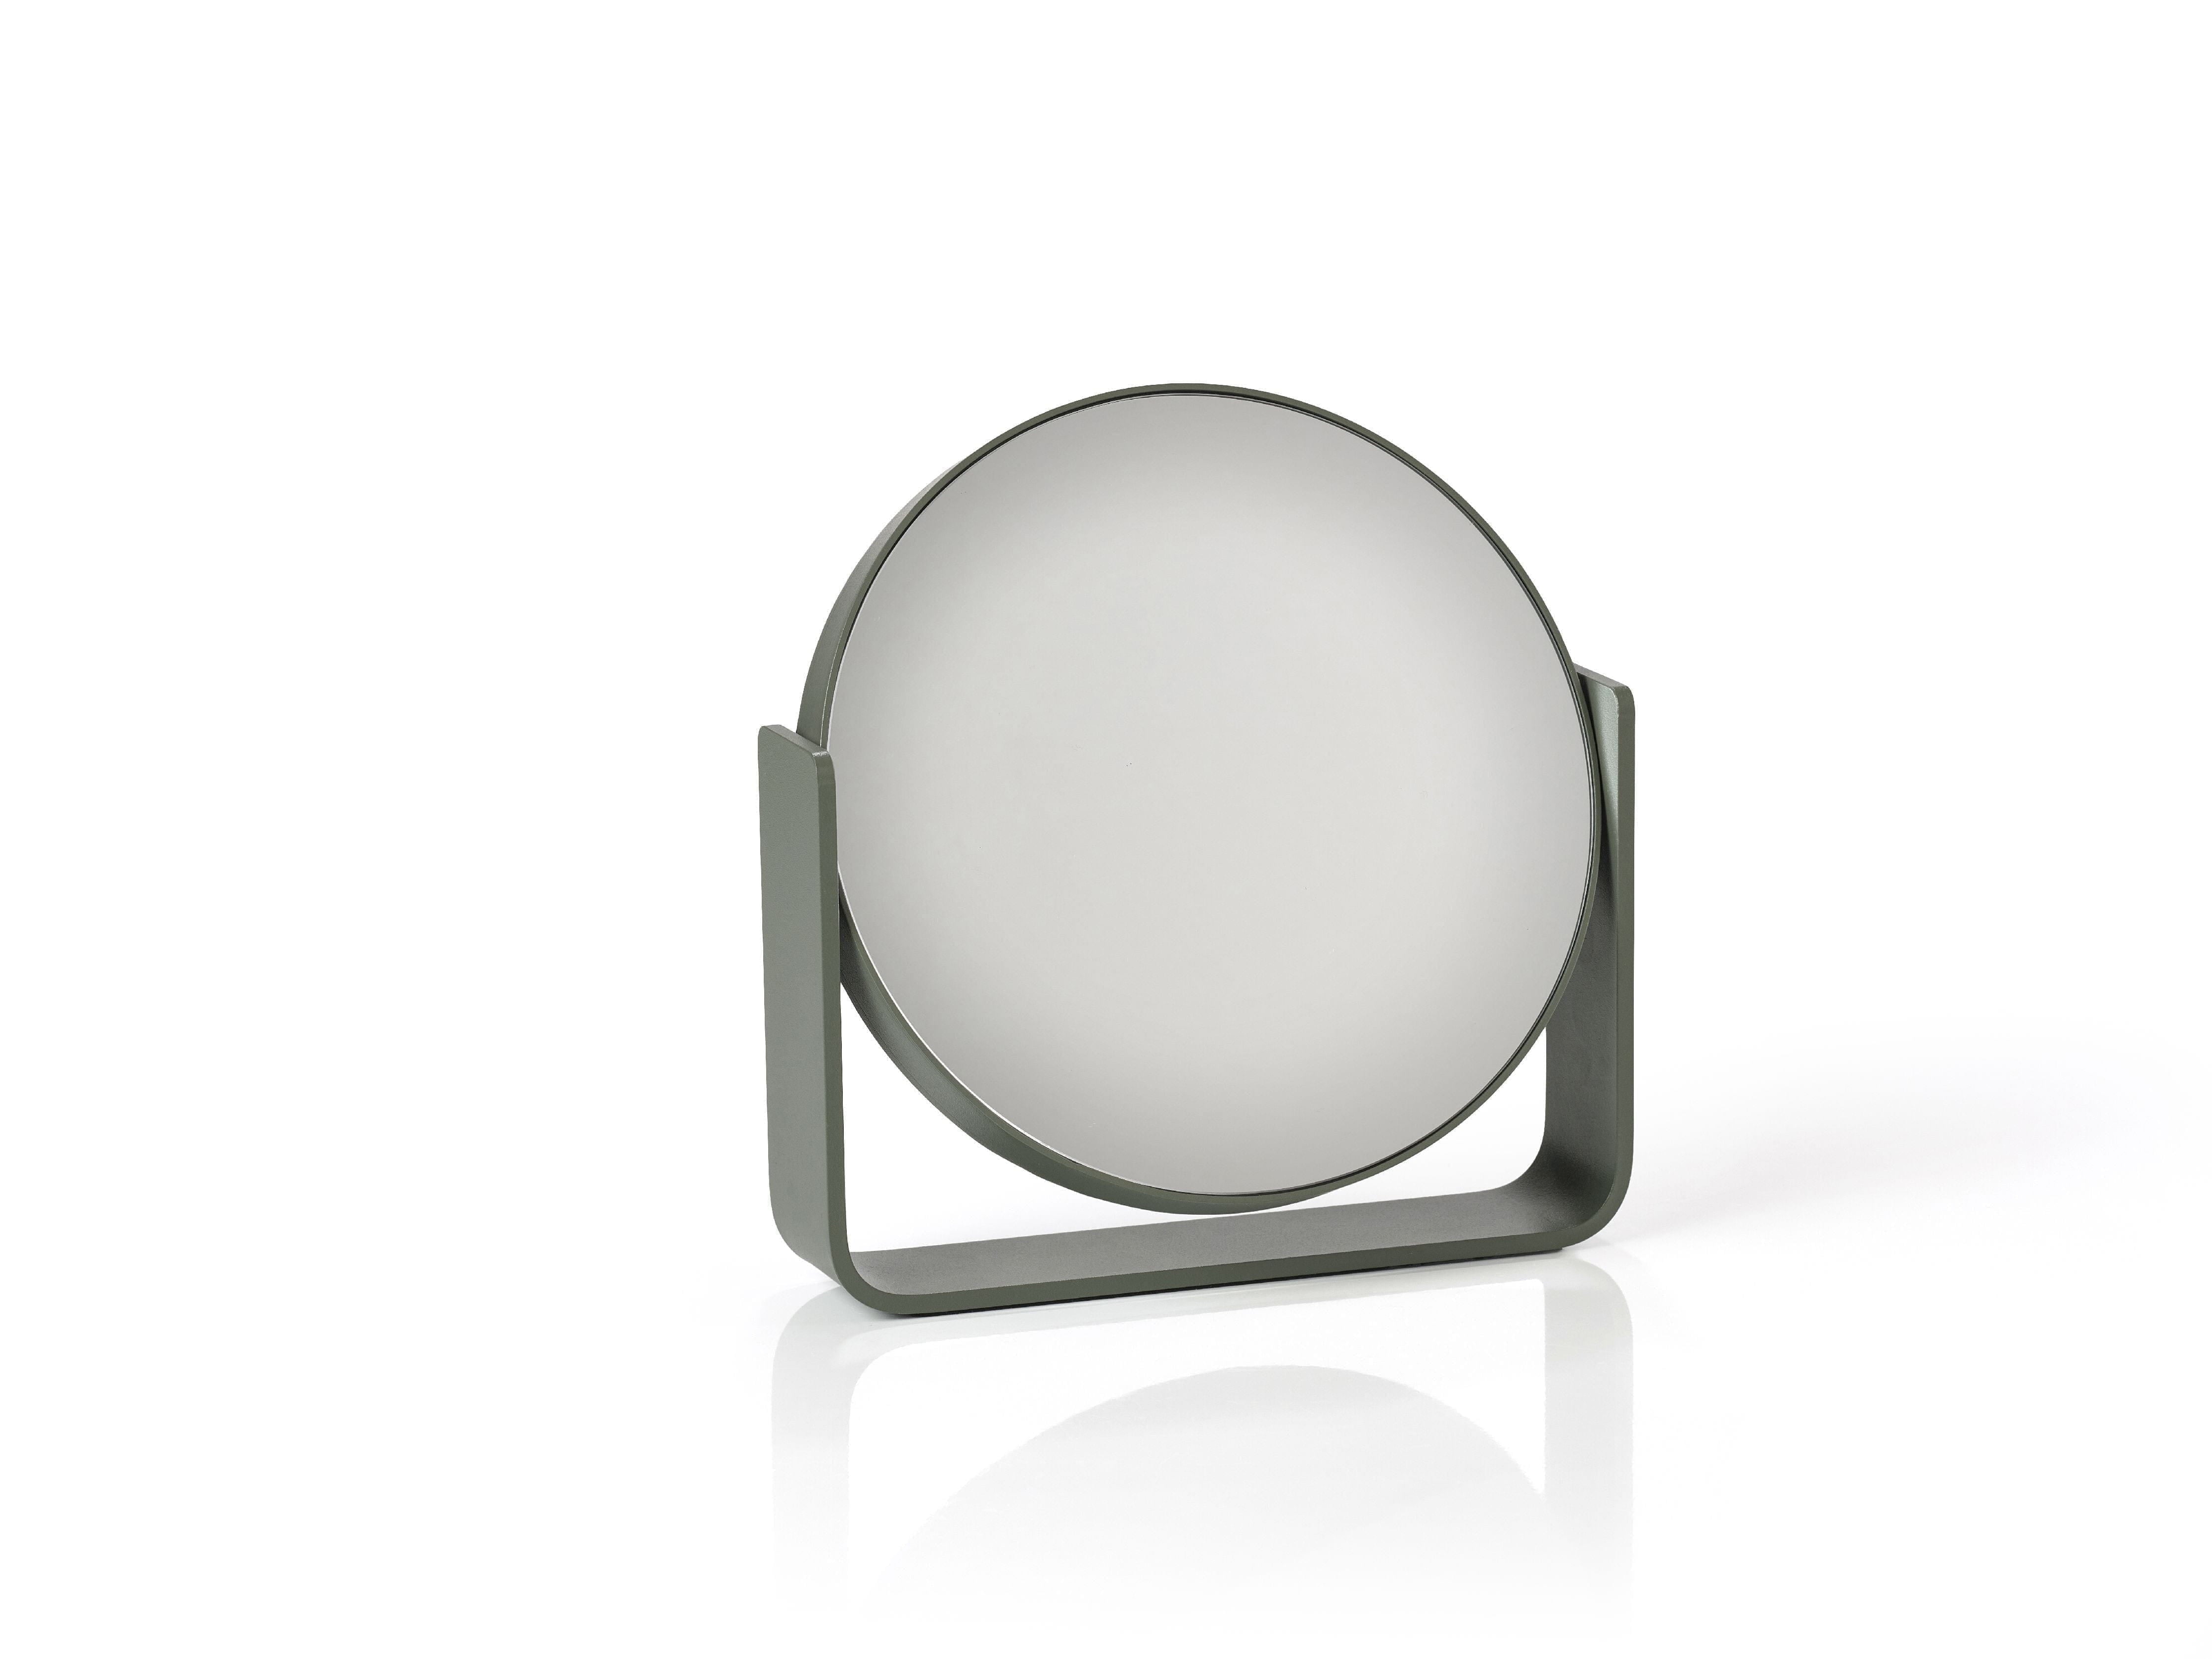 Zone Danemark Ume Table Mirror, Olive Green